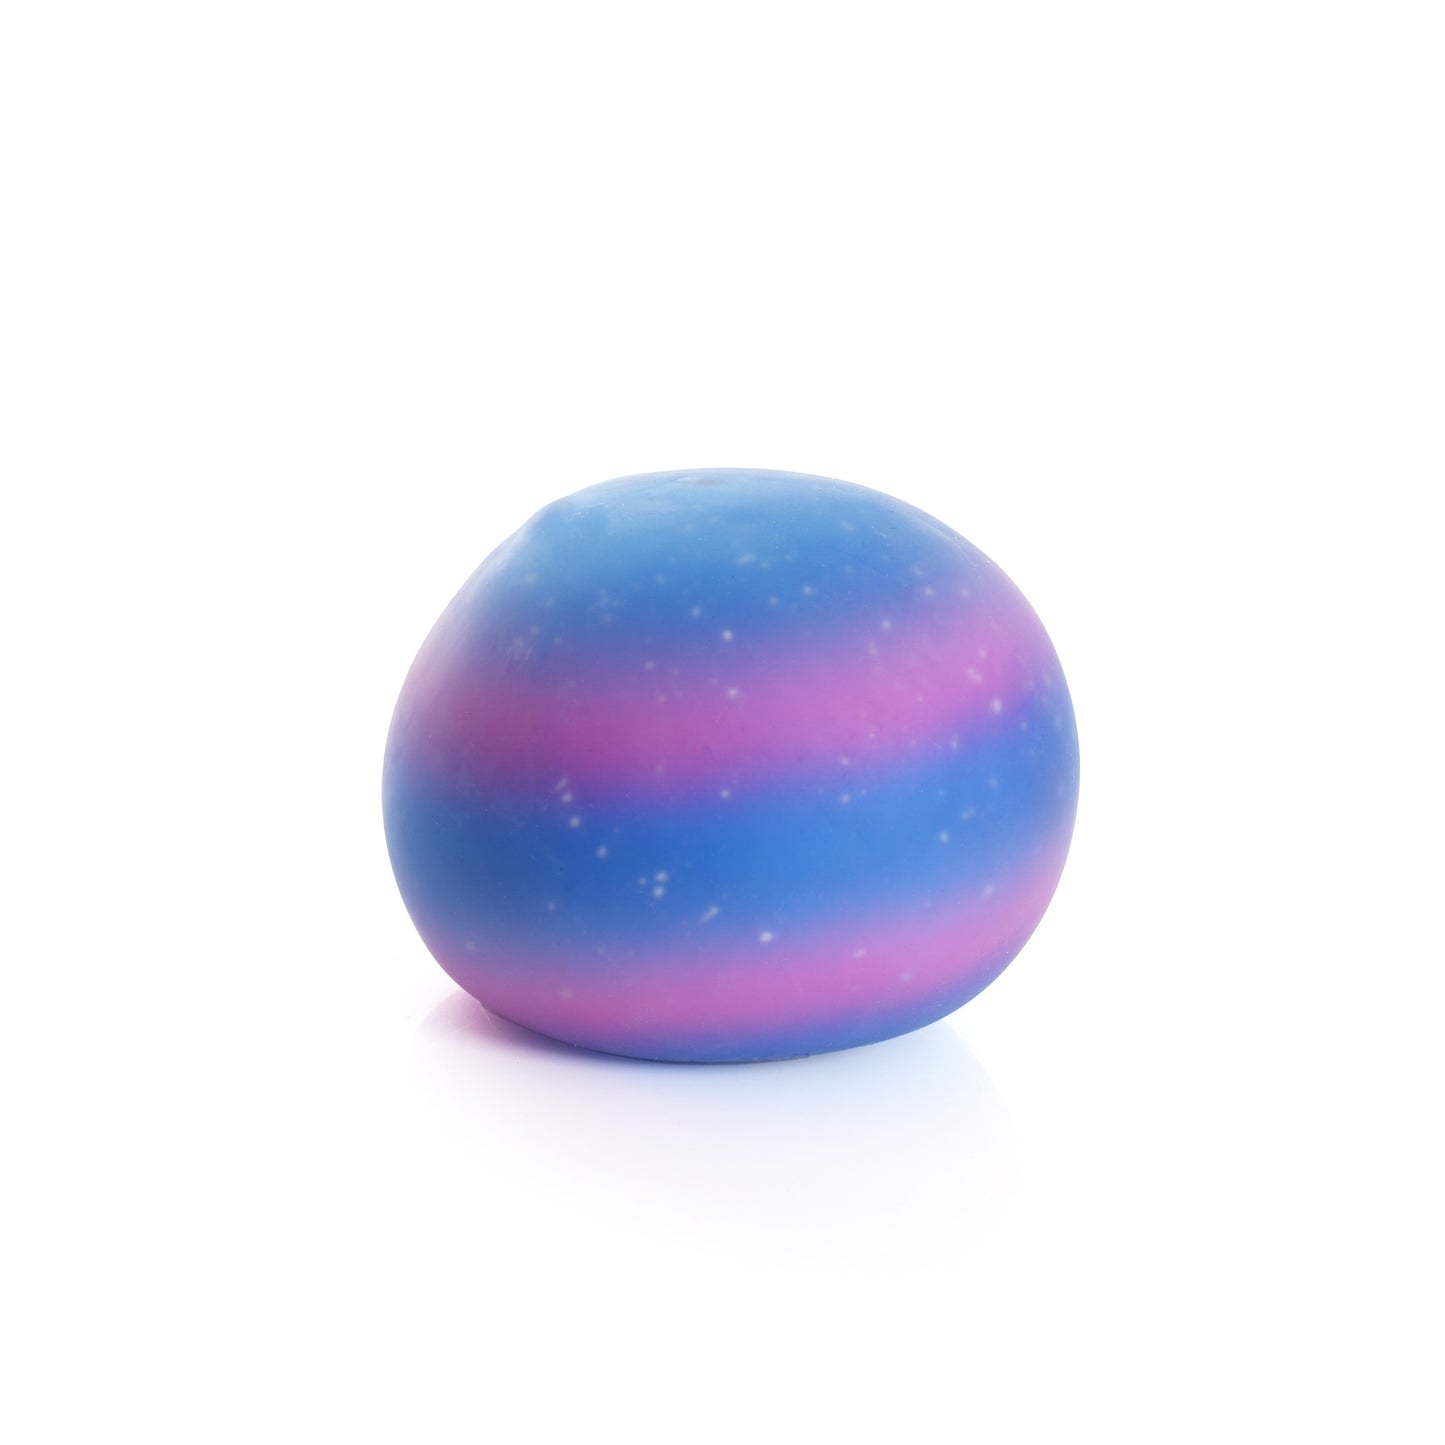 Galaxy Stress Ball Toy